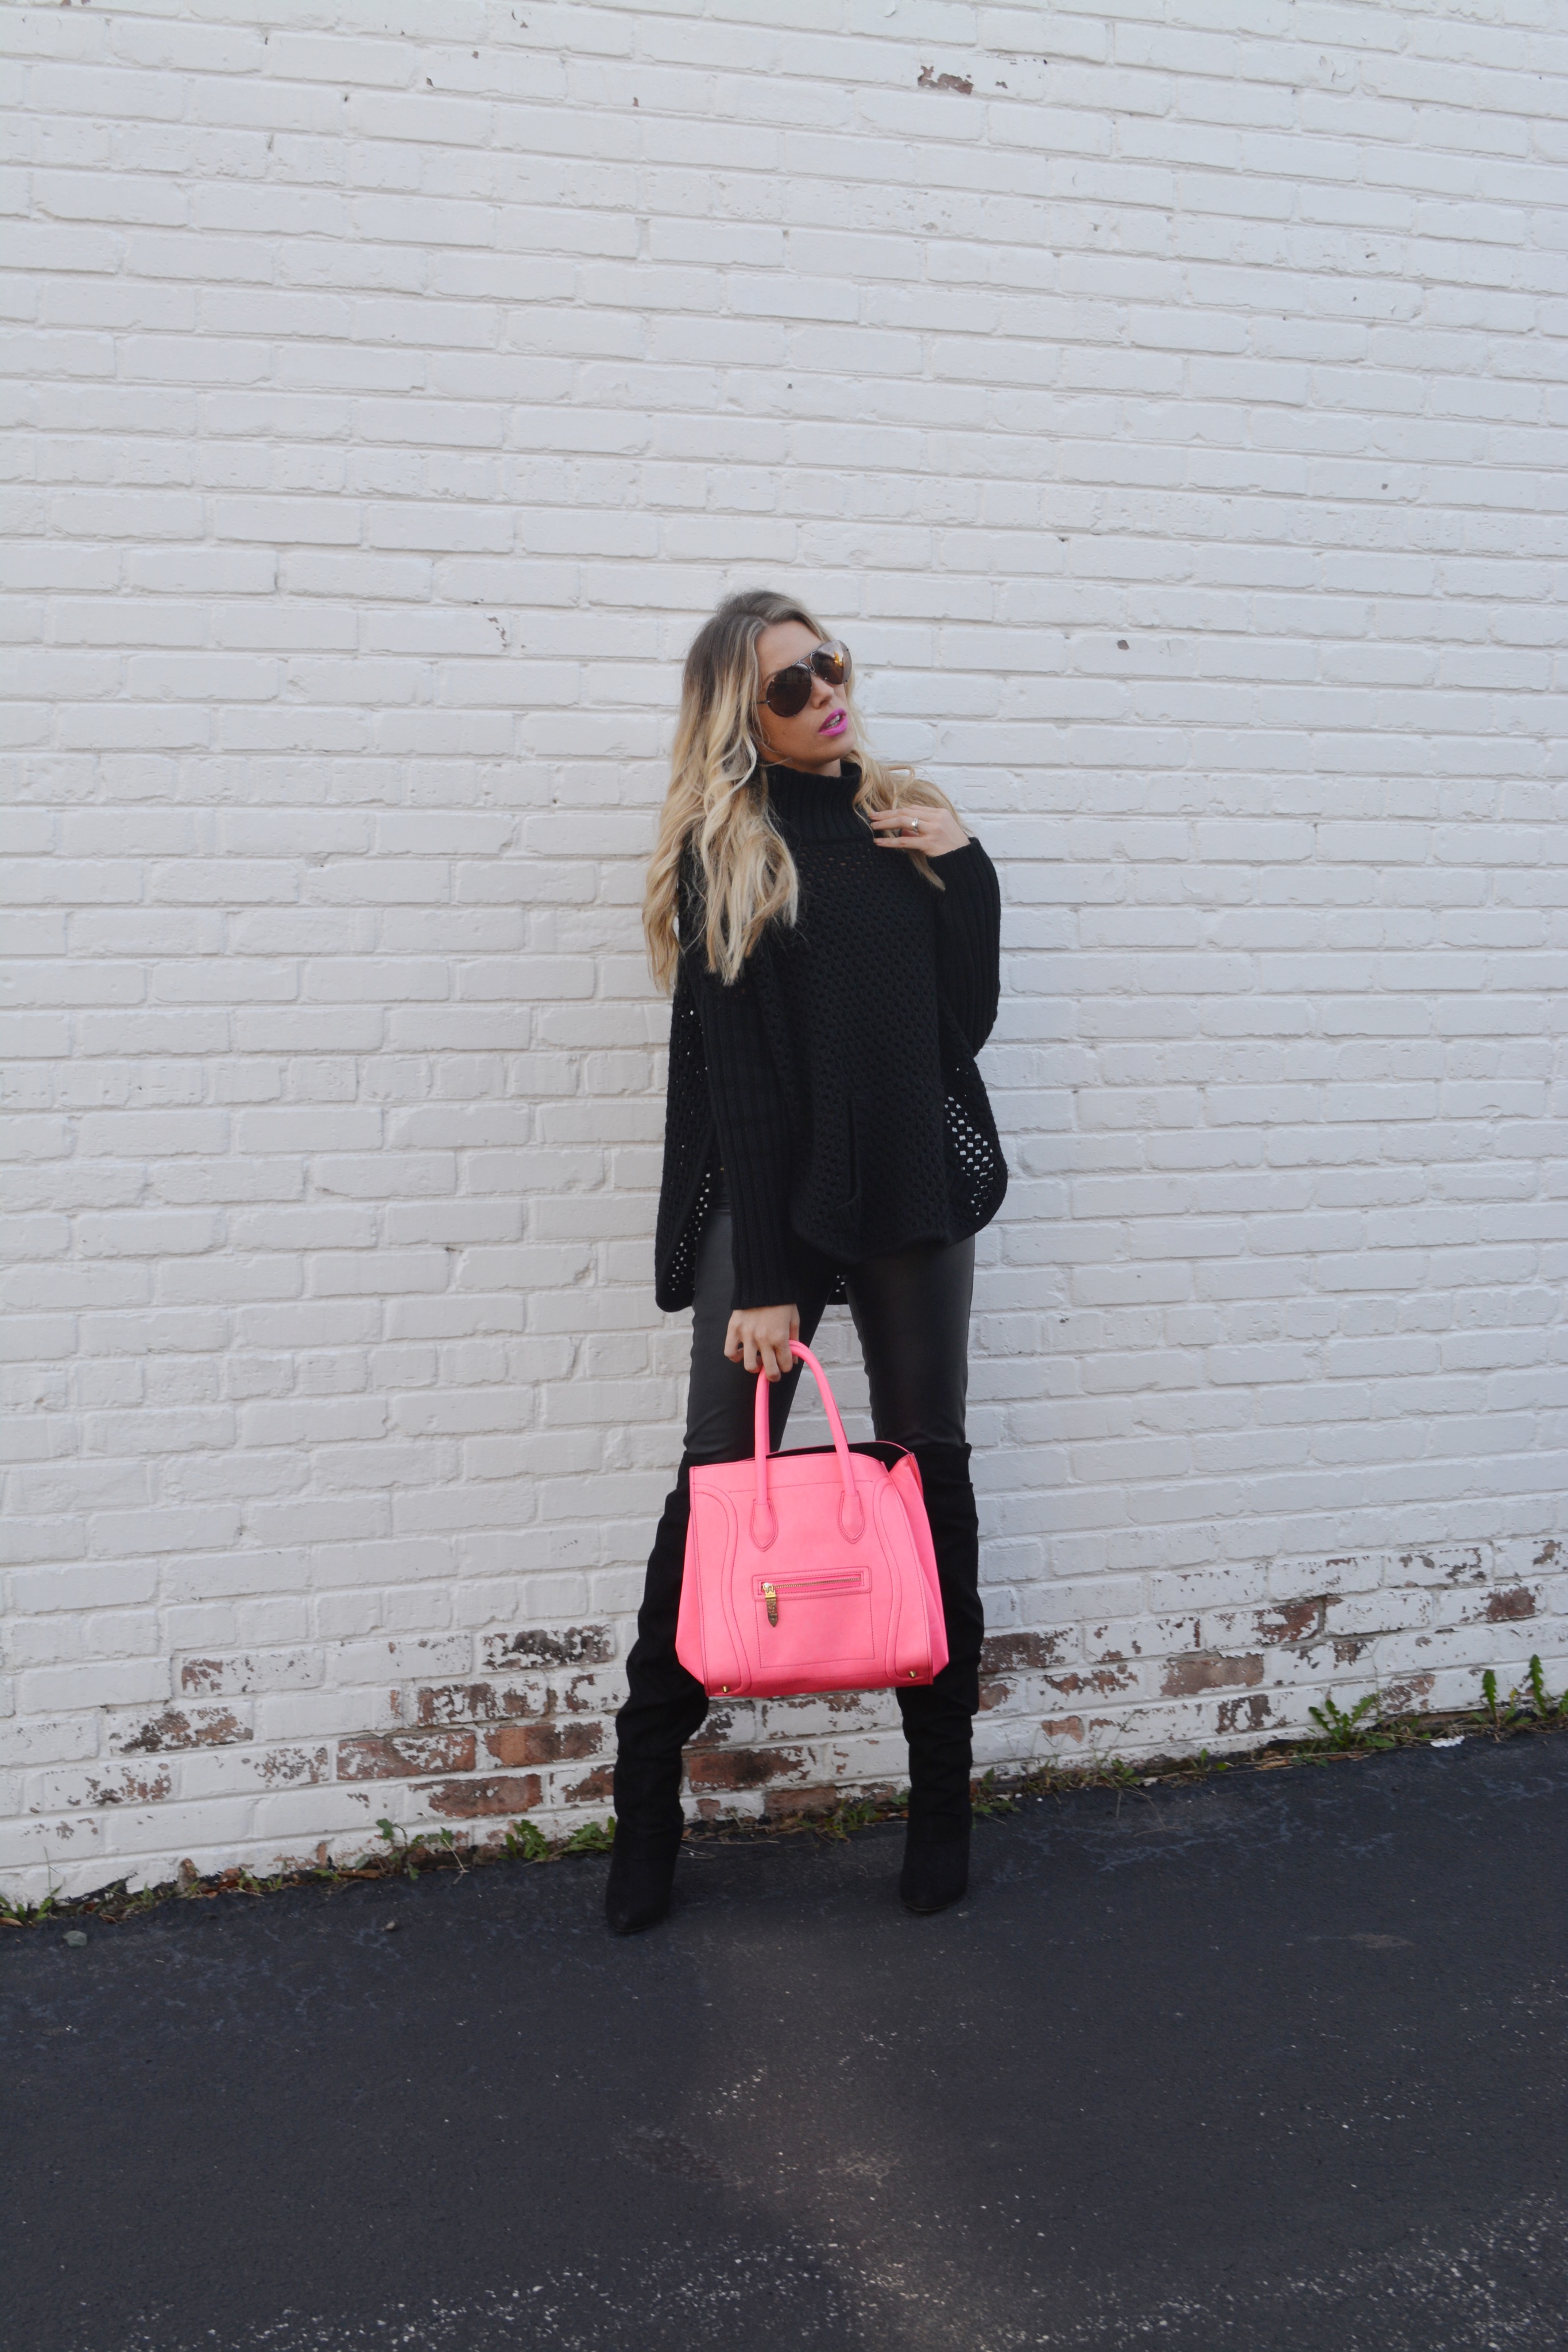 Fashion blogger wearing leather leggings